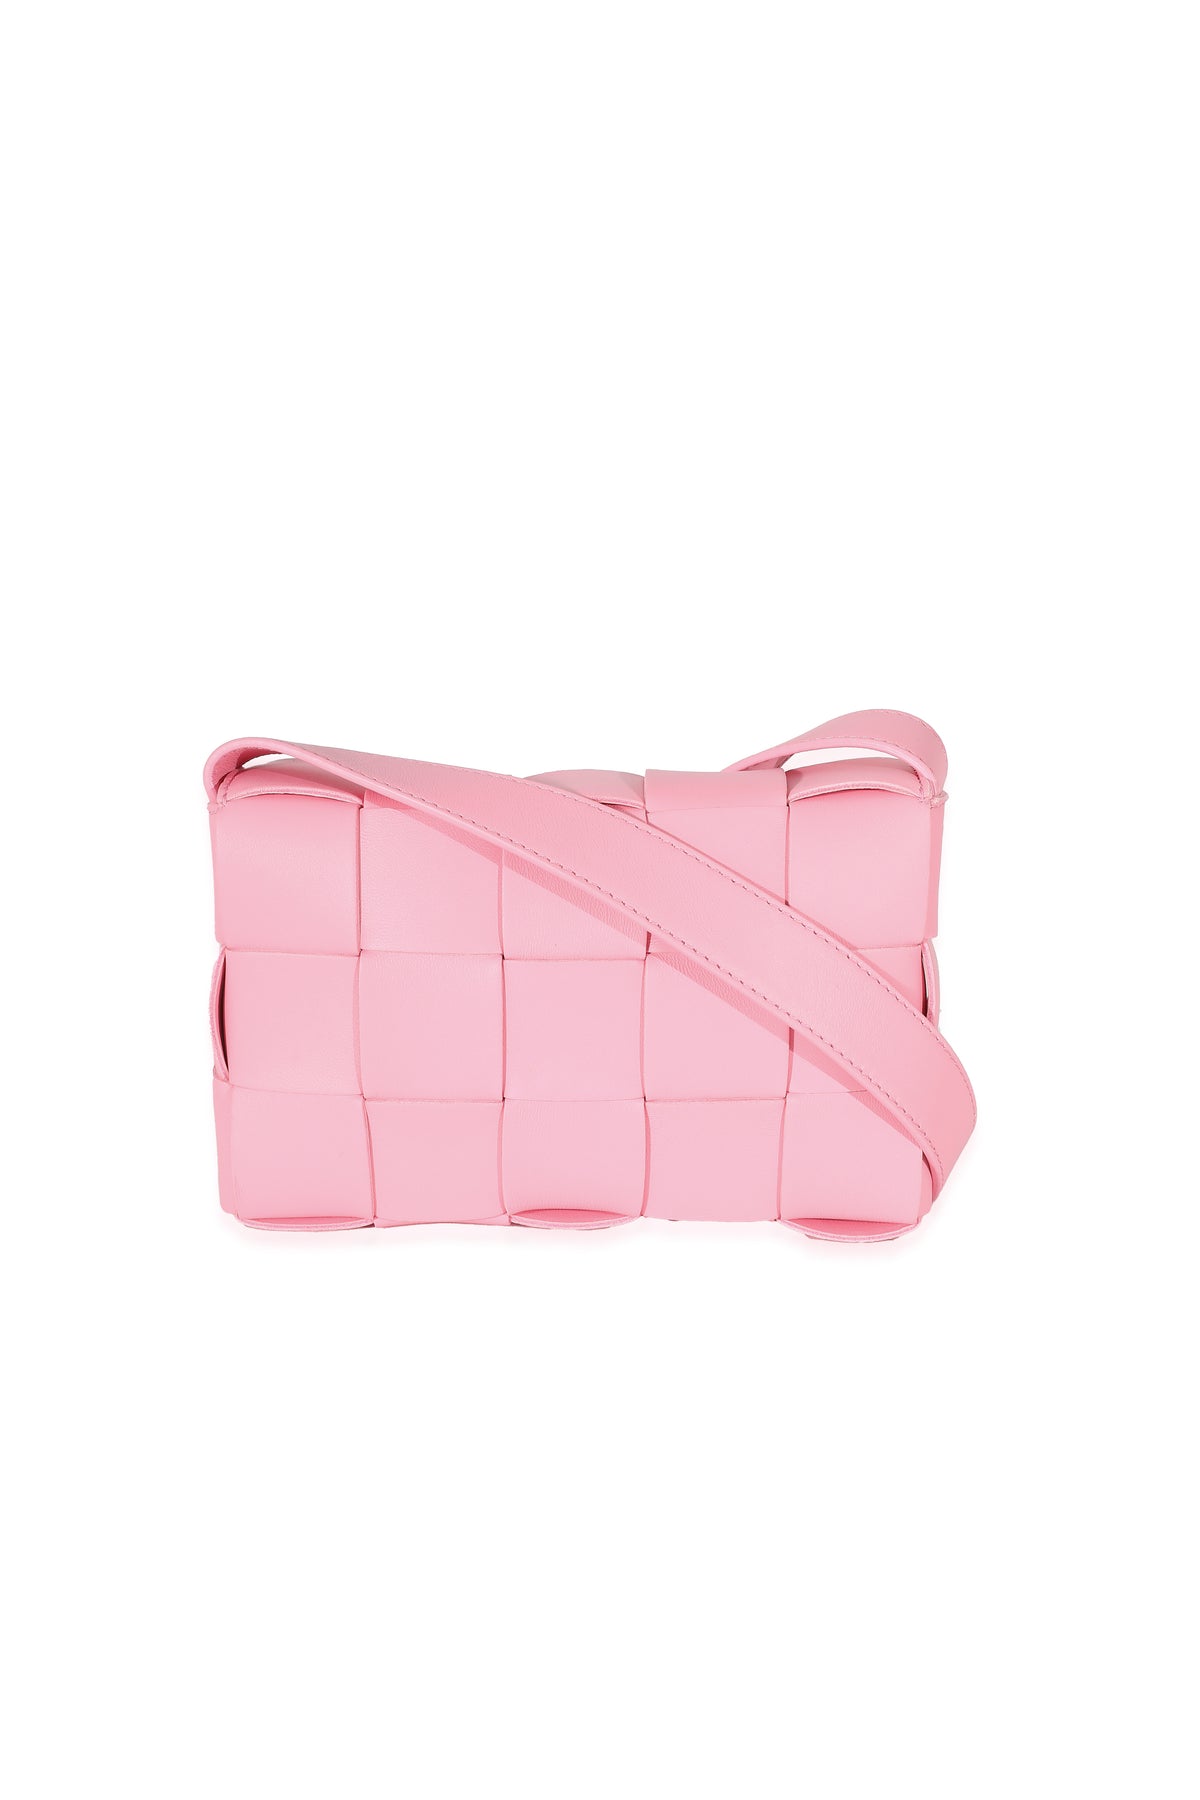 Bottega Veneta Pink Intrecciato Lambskin Small Cassette Bag